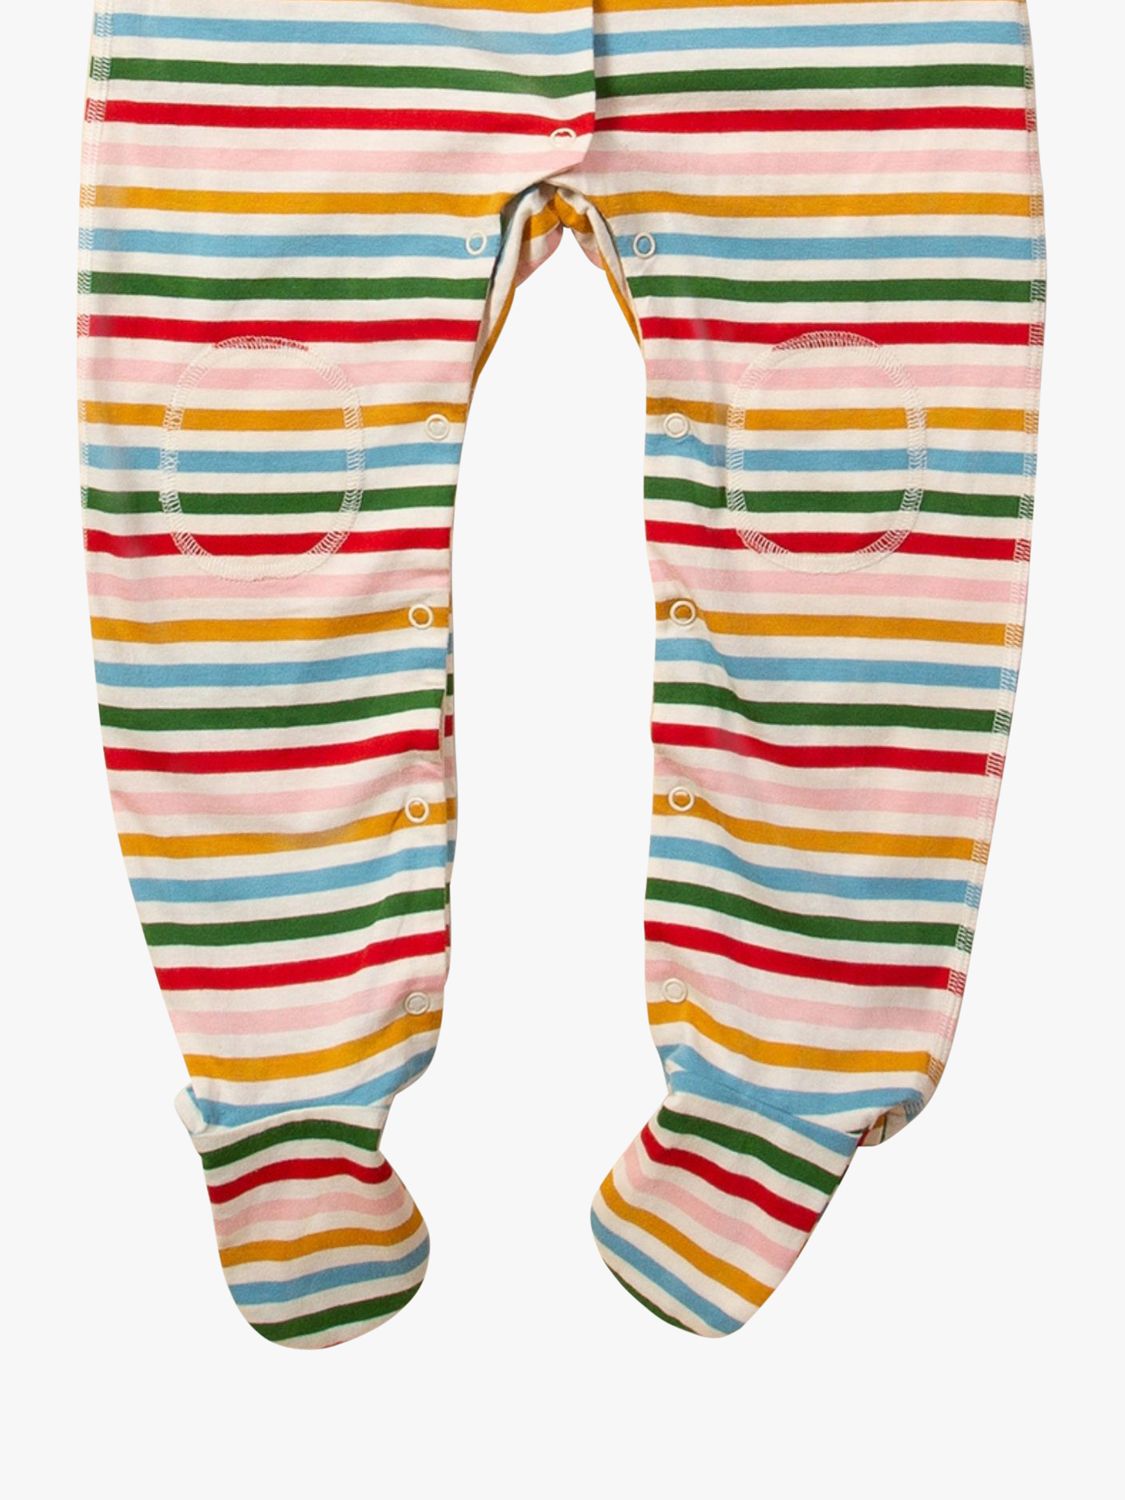 Little Green Radicals Kids' Adaptive Organic Cotton Summer Rainbow Striped Sleepsuit, Multi, 18-24 months